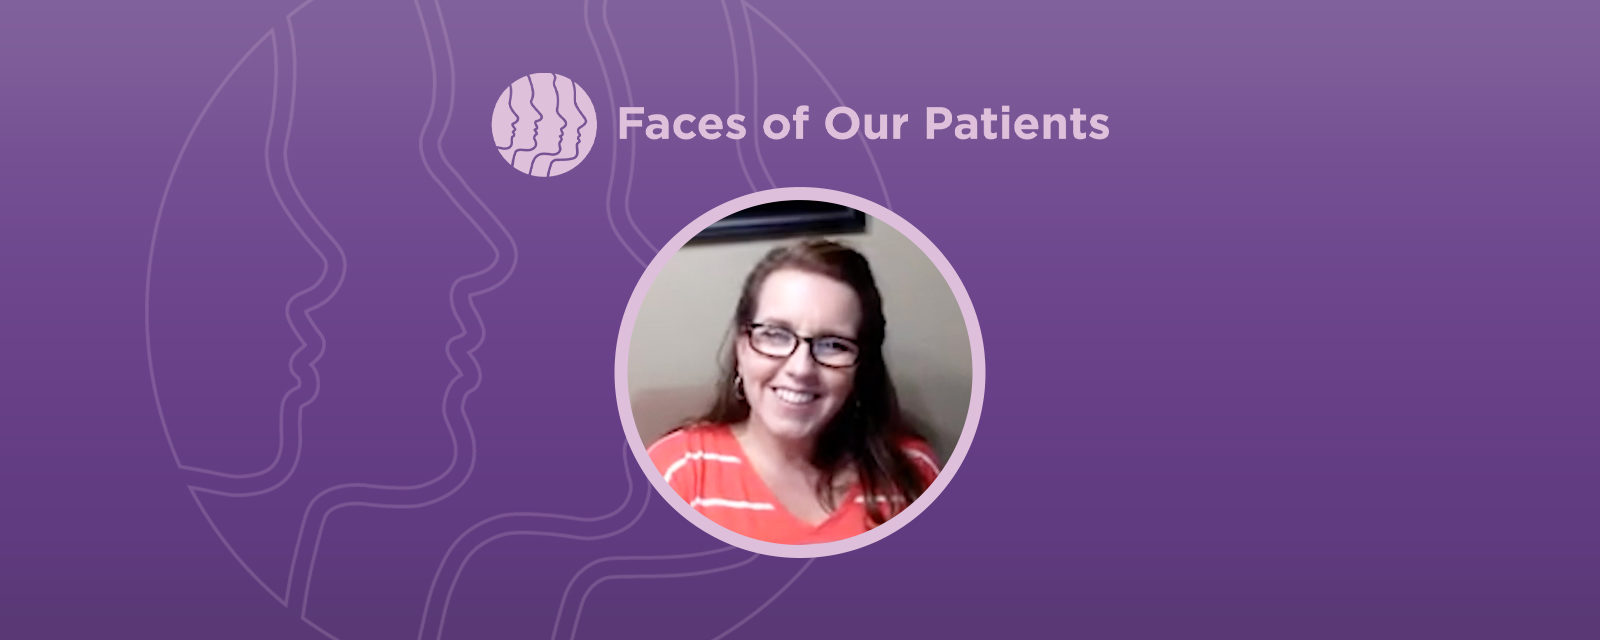 Faces of Our Patients: Rheumatoid Arthritis